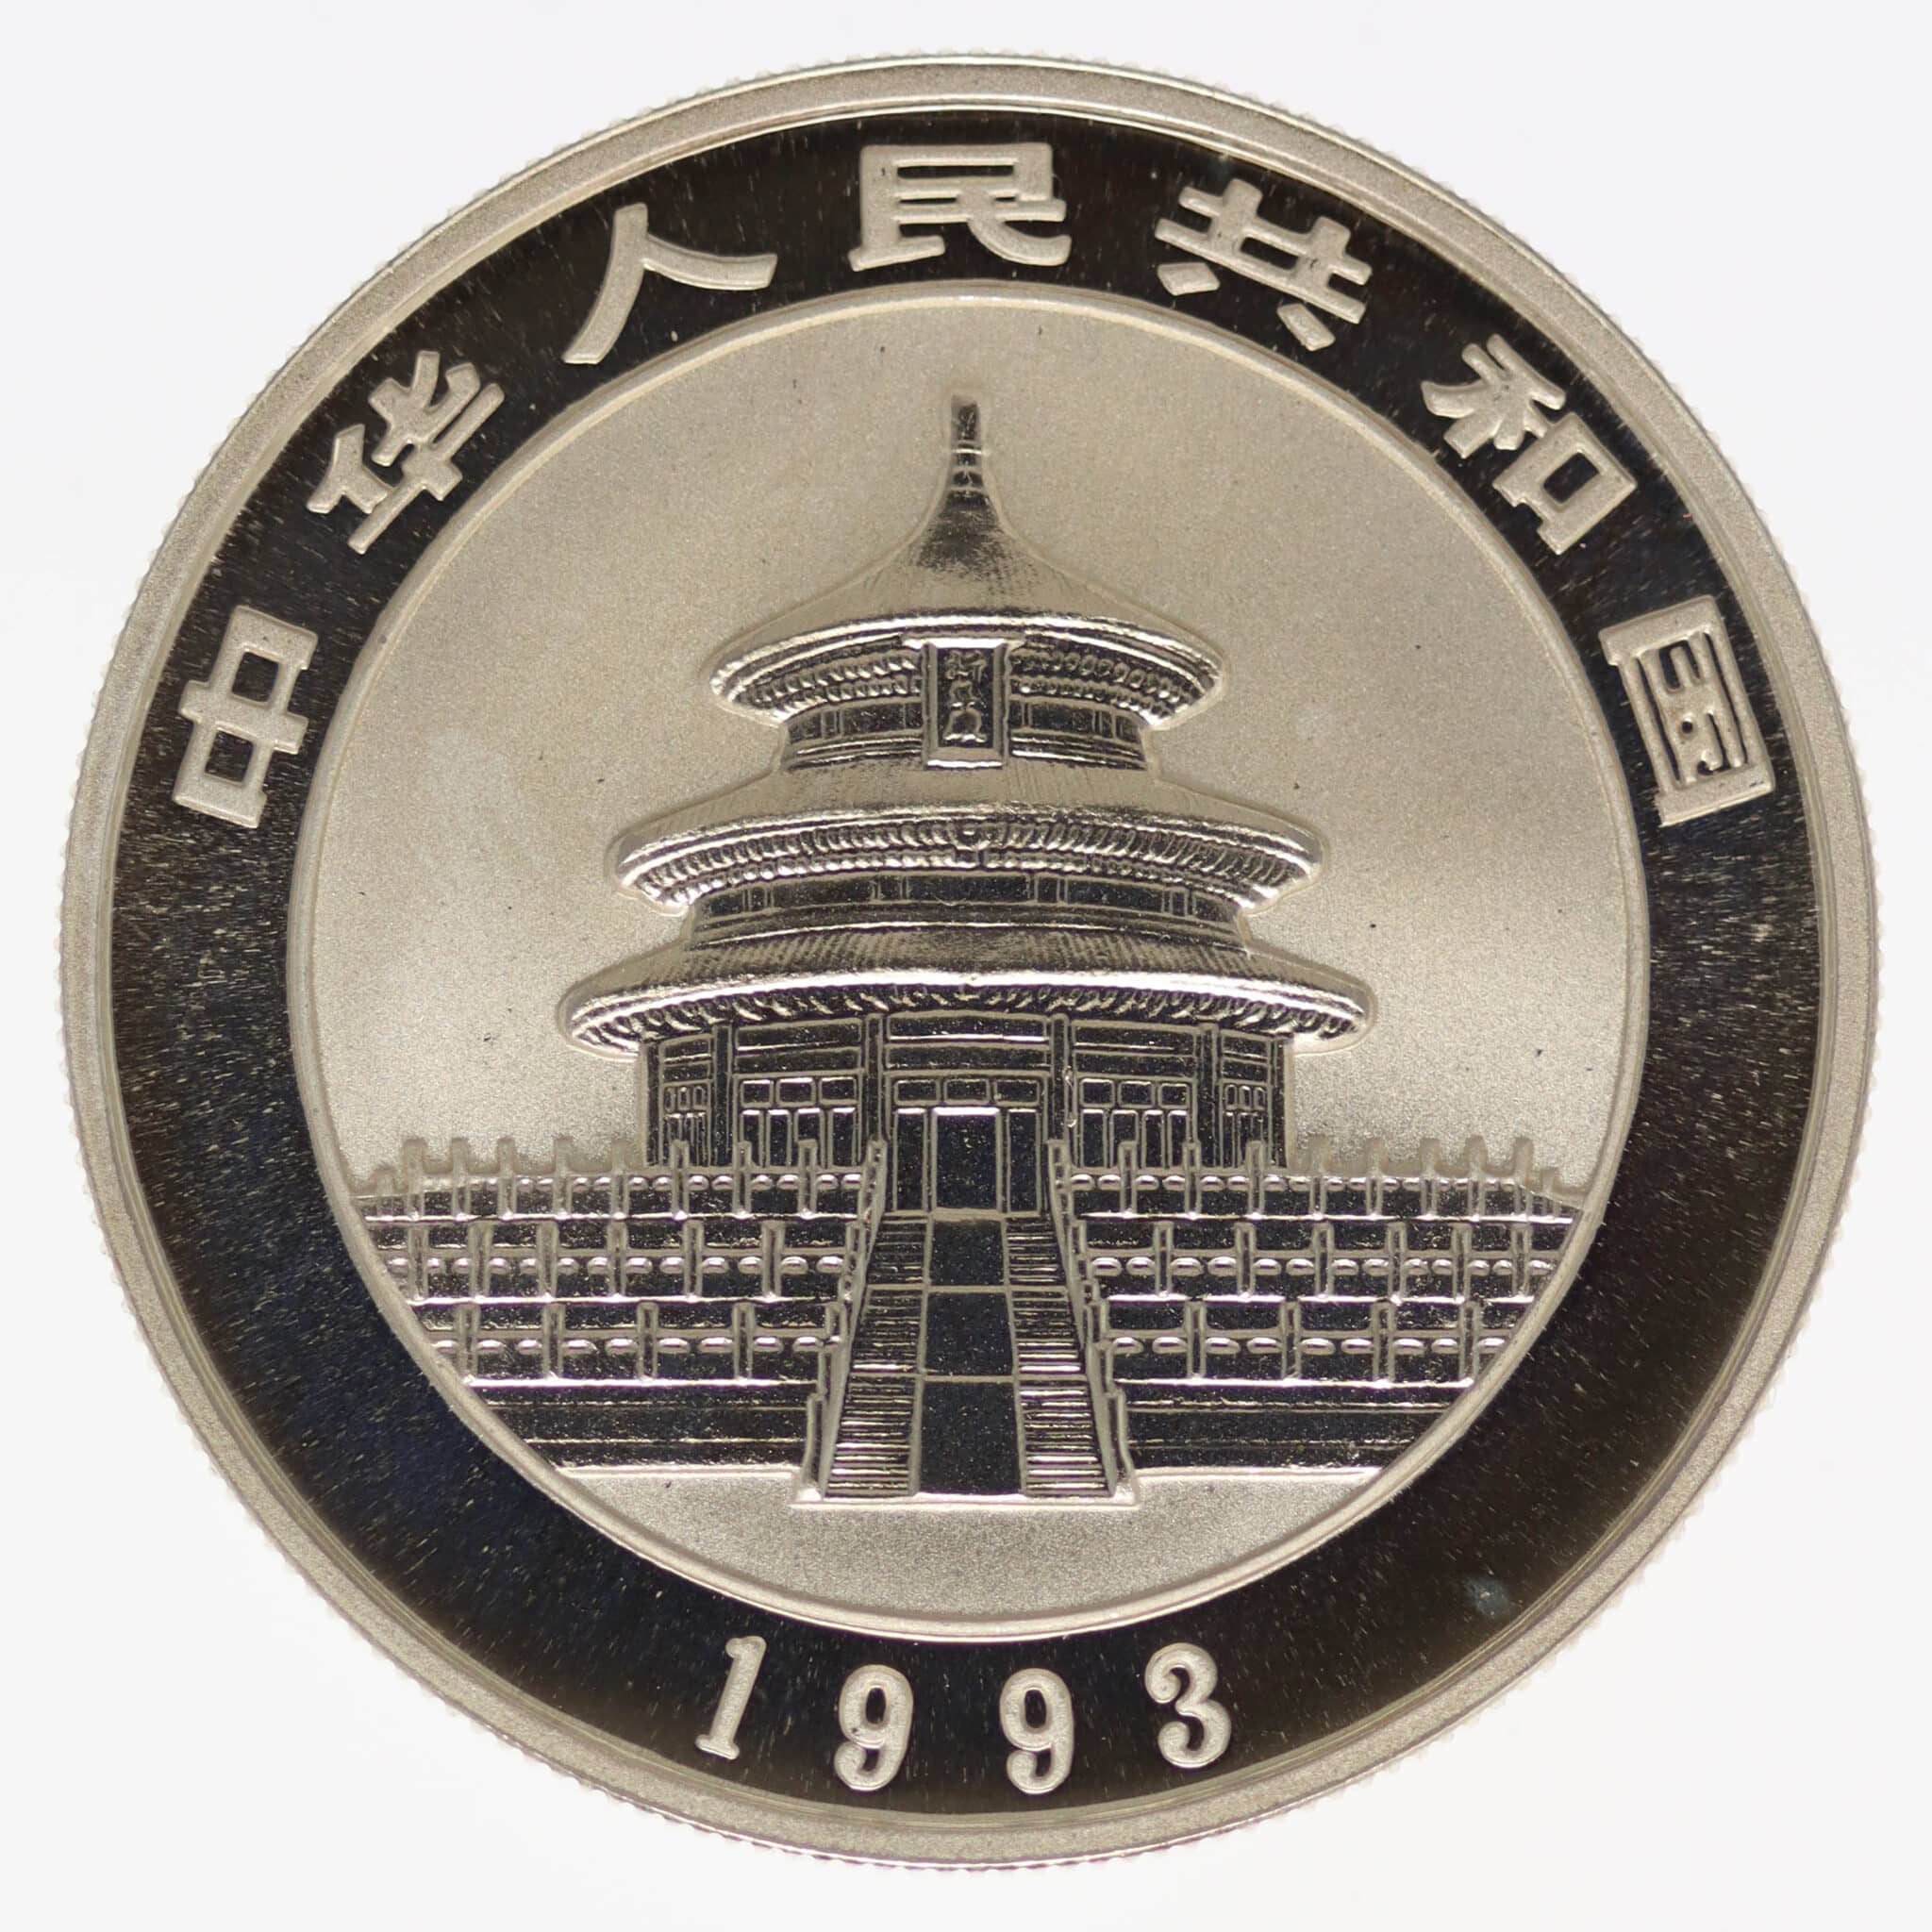 china-panda - Panda-Münzen: Der "Emerging Market" der Numismatik